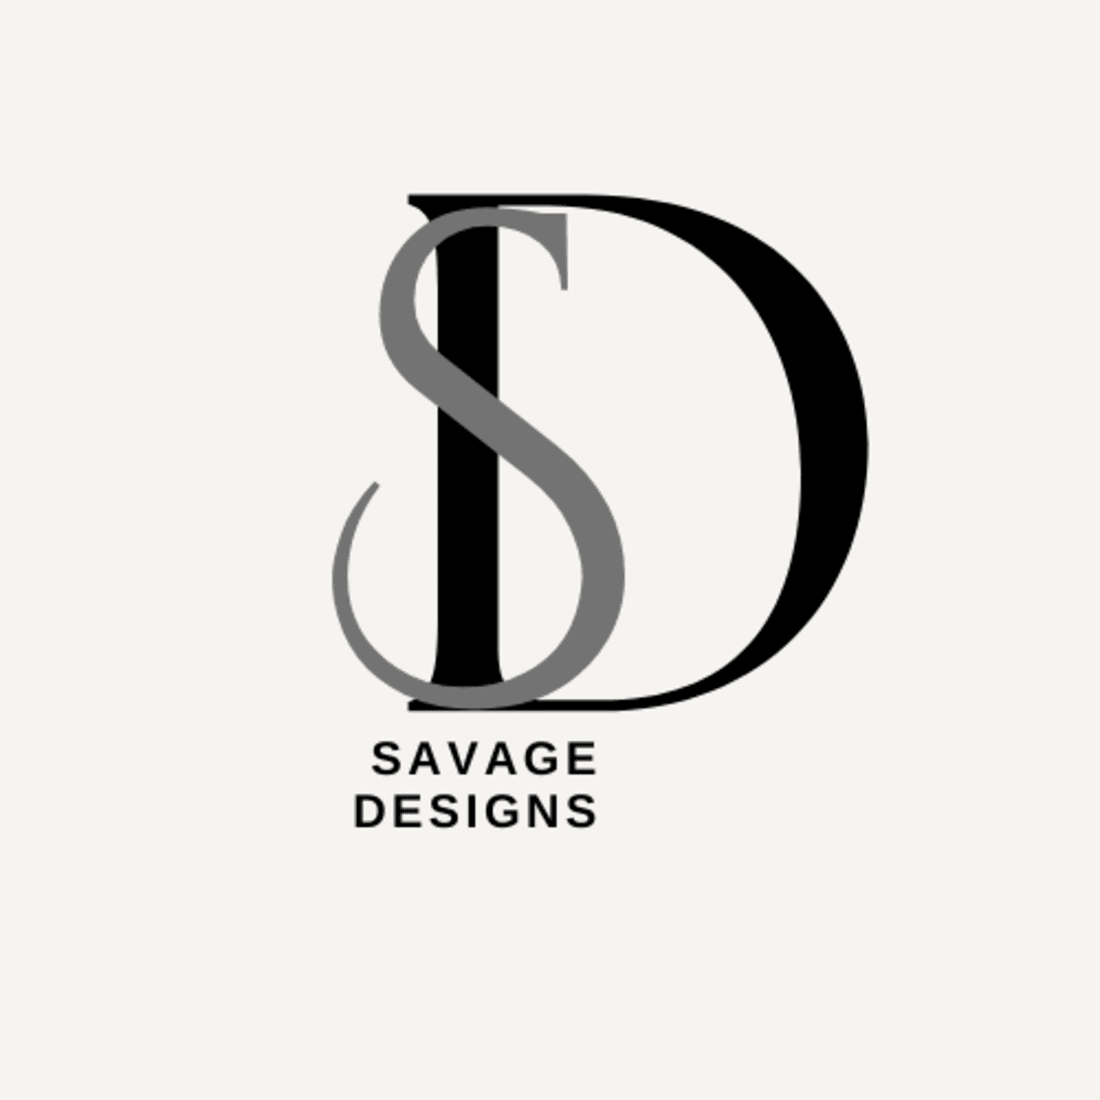 Unique Logos for Designs cover image.